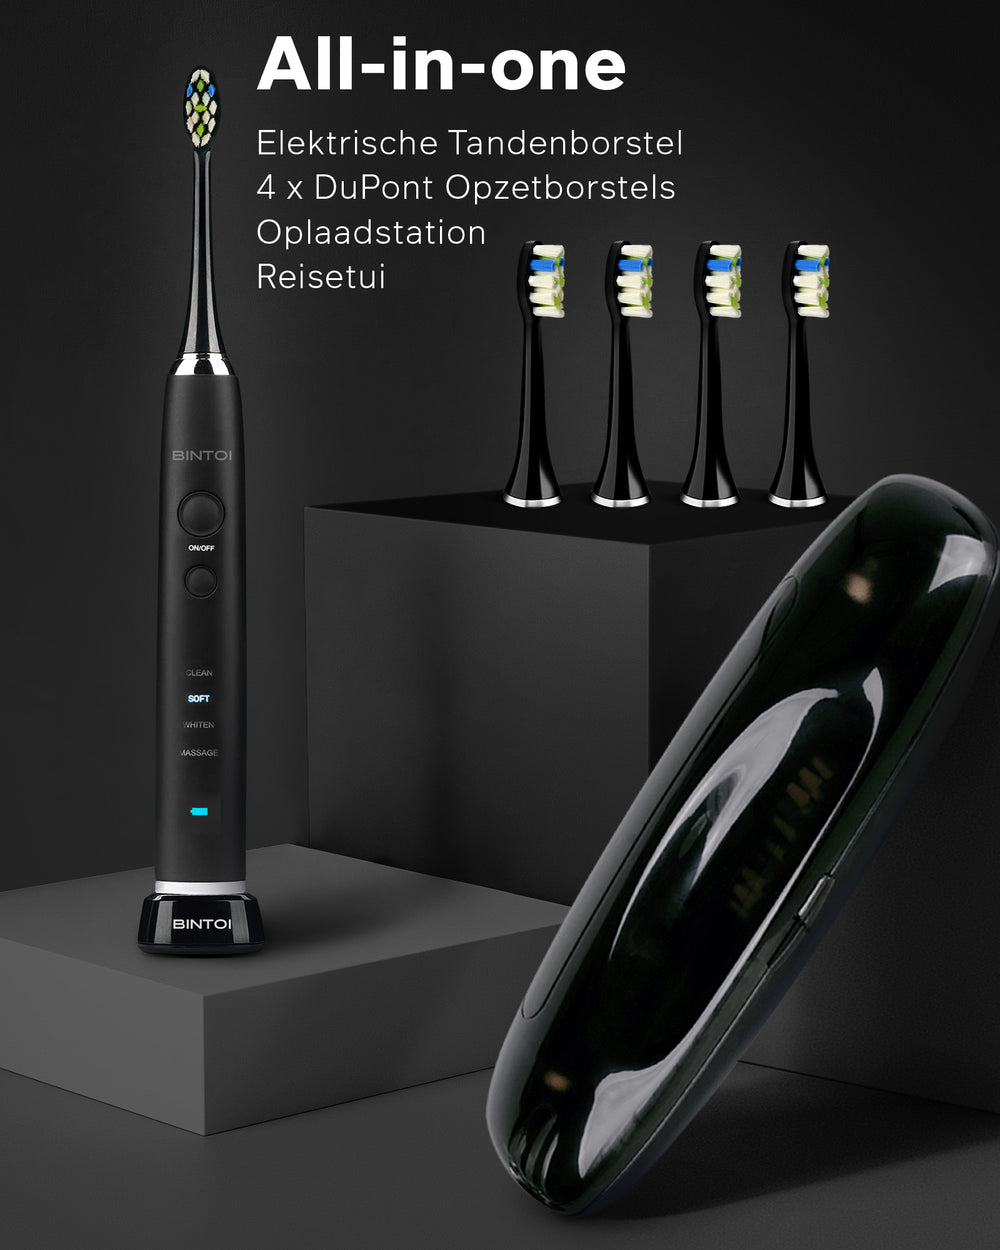 BINTOI iSonic Black Series D700 - Elektrische tandenborstel